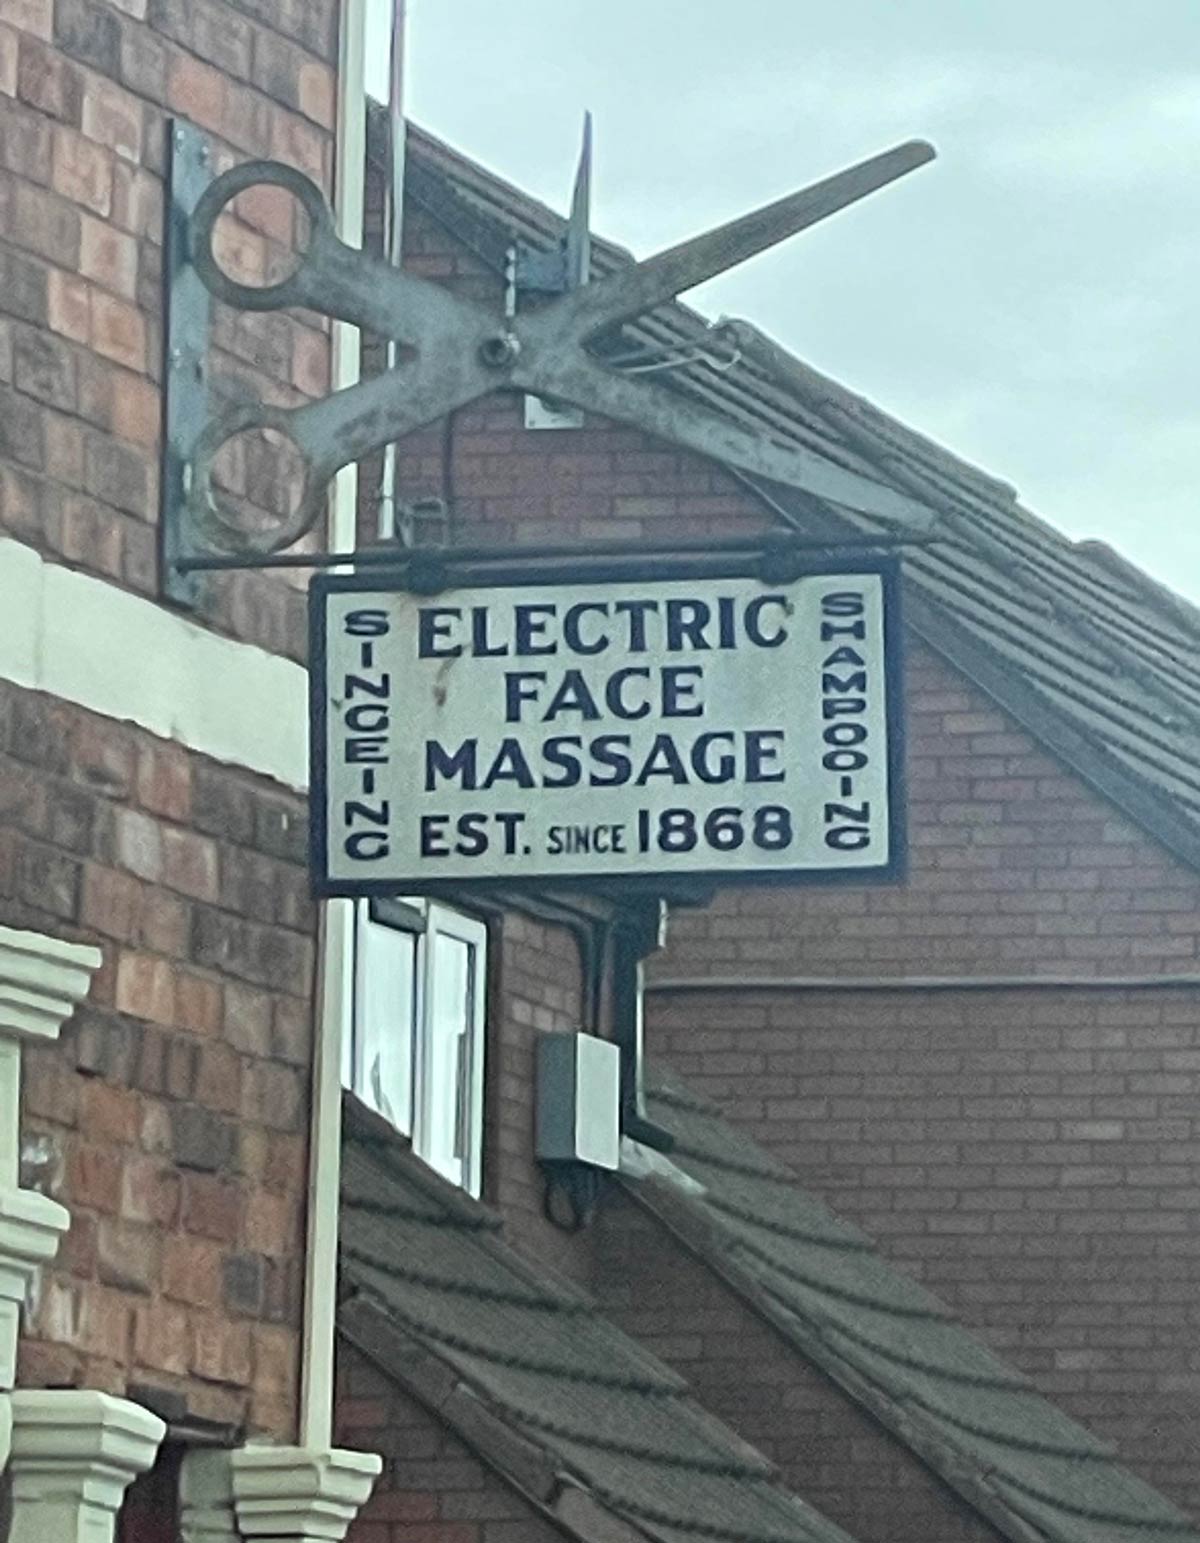 Electric face massage